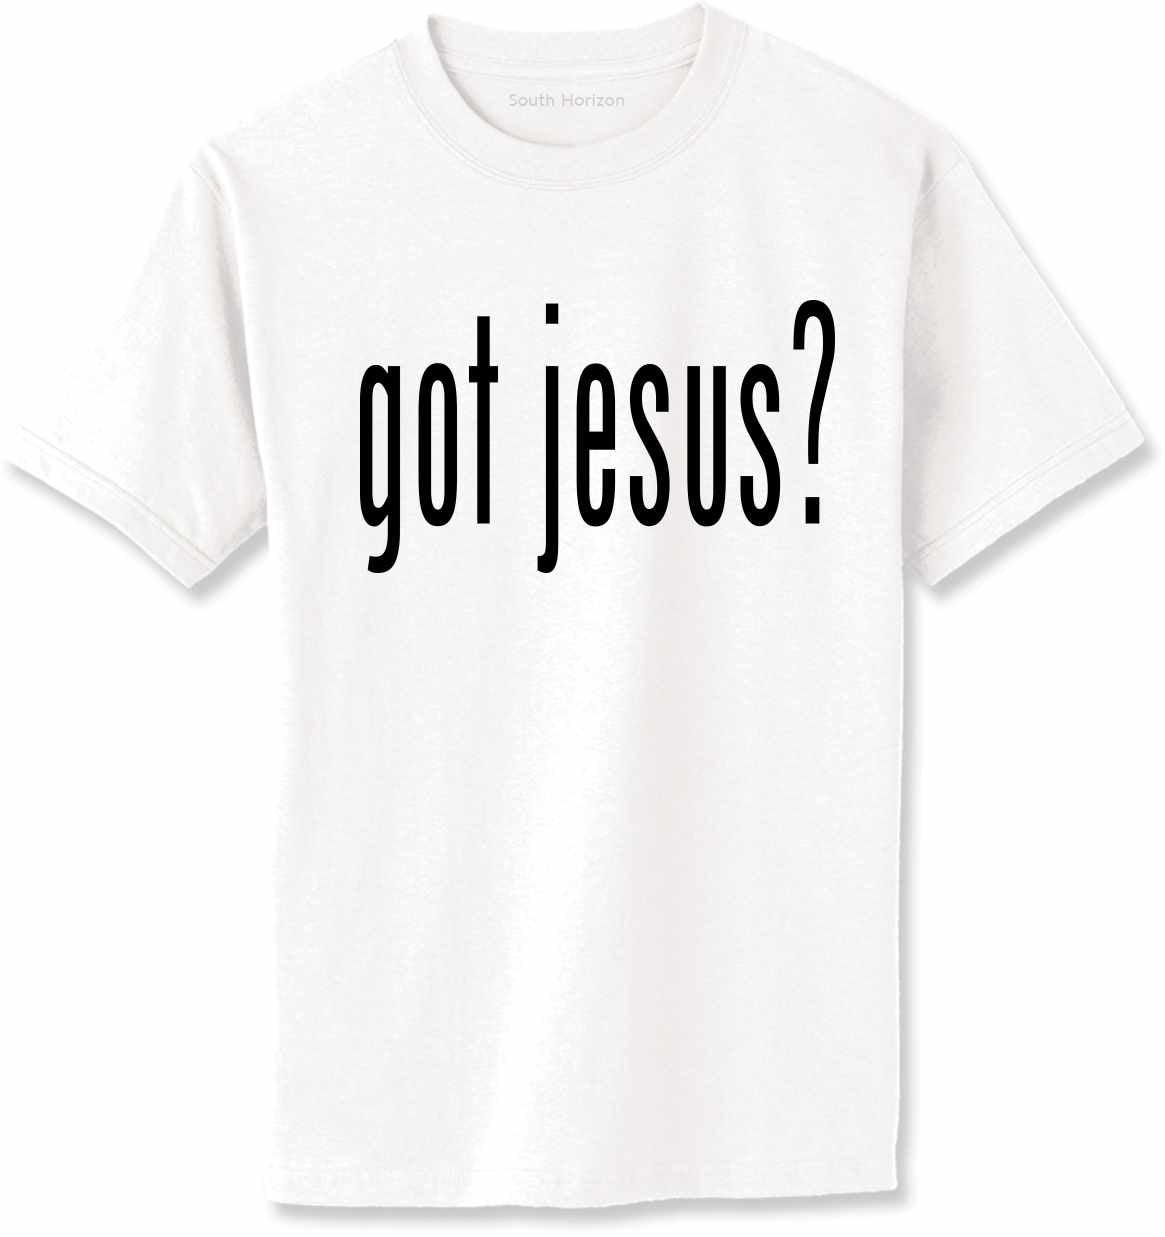 GOT JESUS? Adult T-Shirt